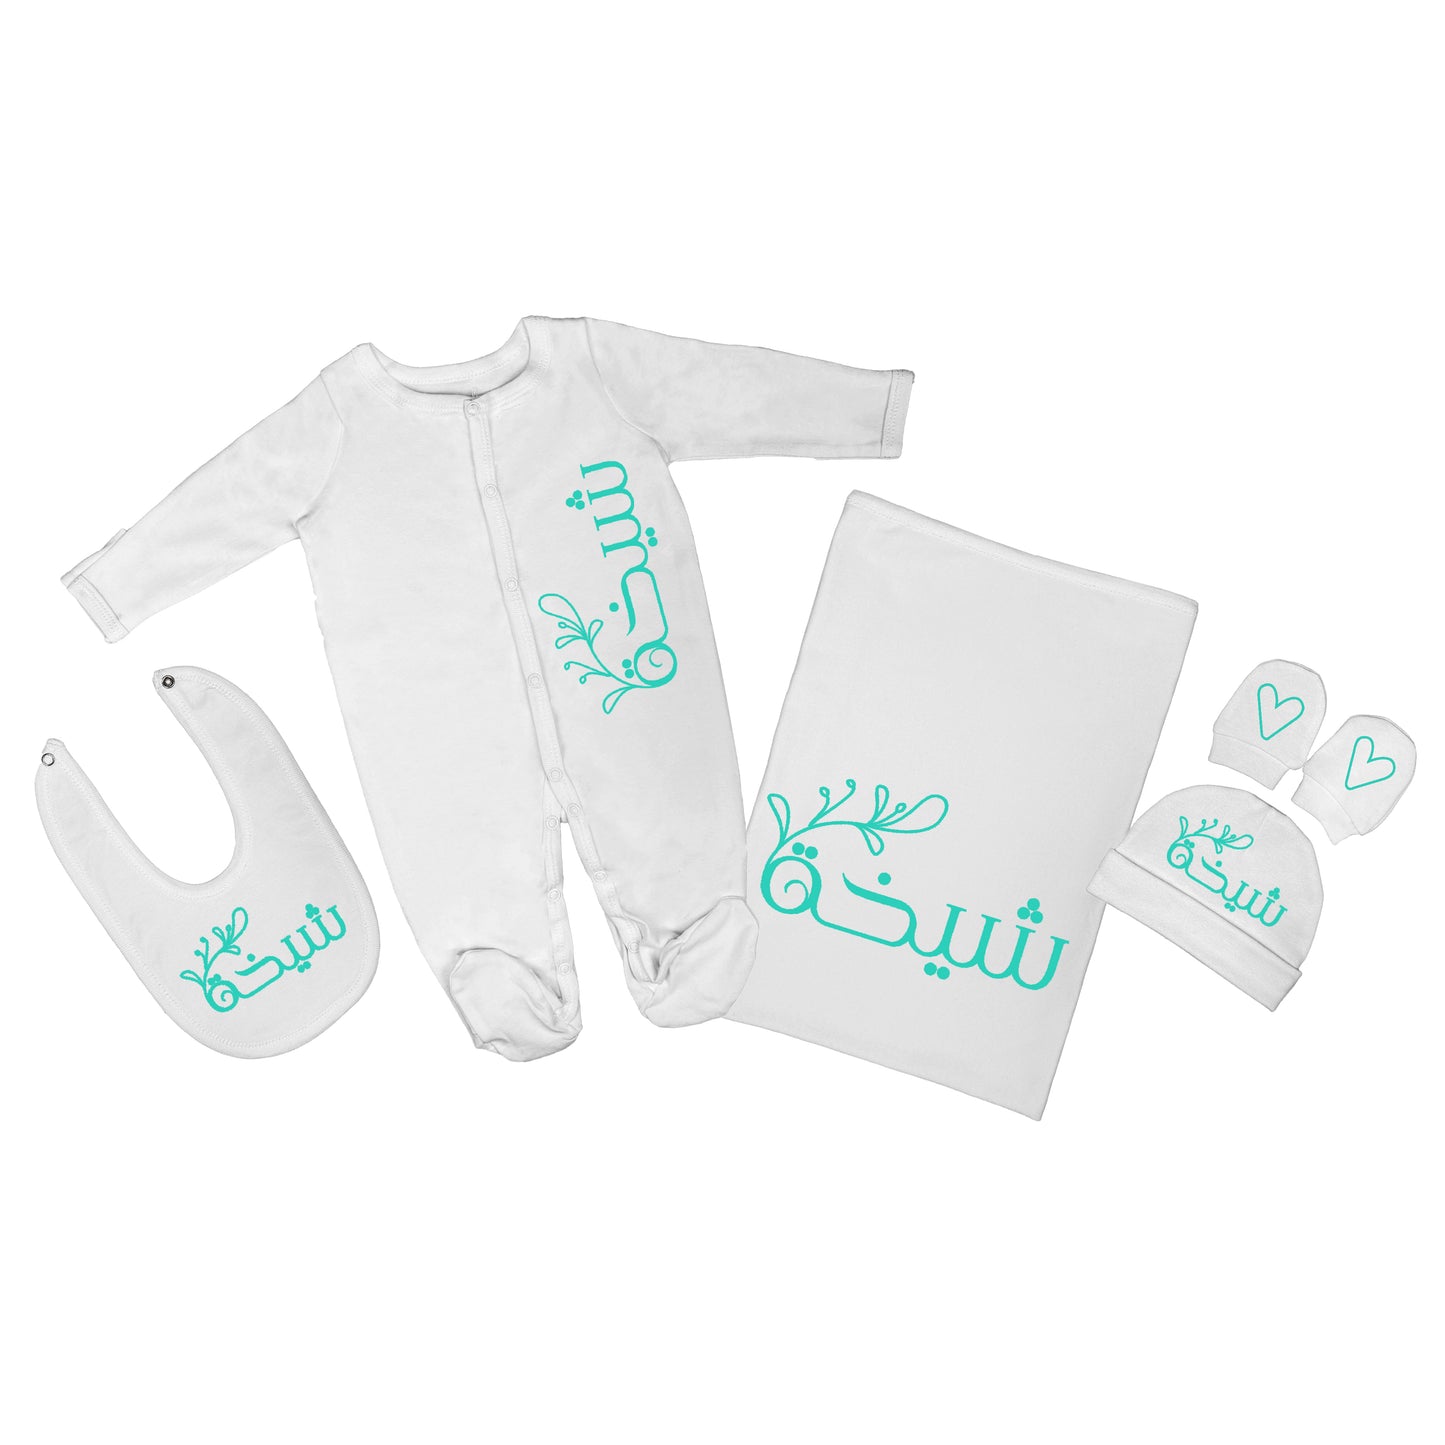 Personalized Baby Clothing Set (Blanket, Sleepsuit, Beanie, Bib, Mittens) - Flower